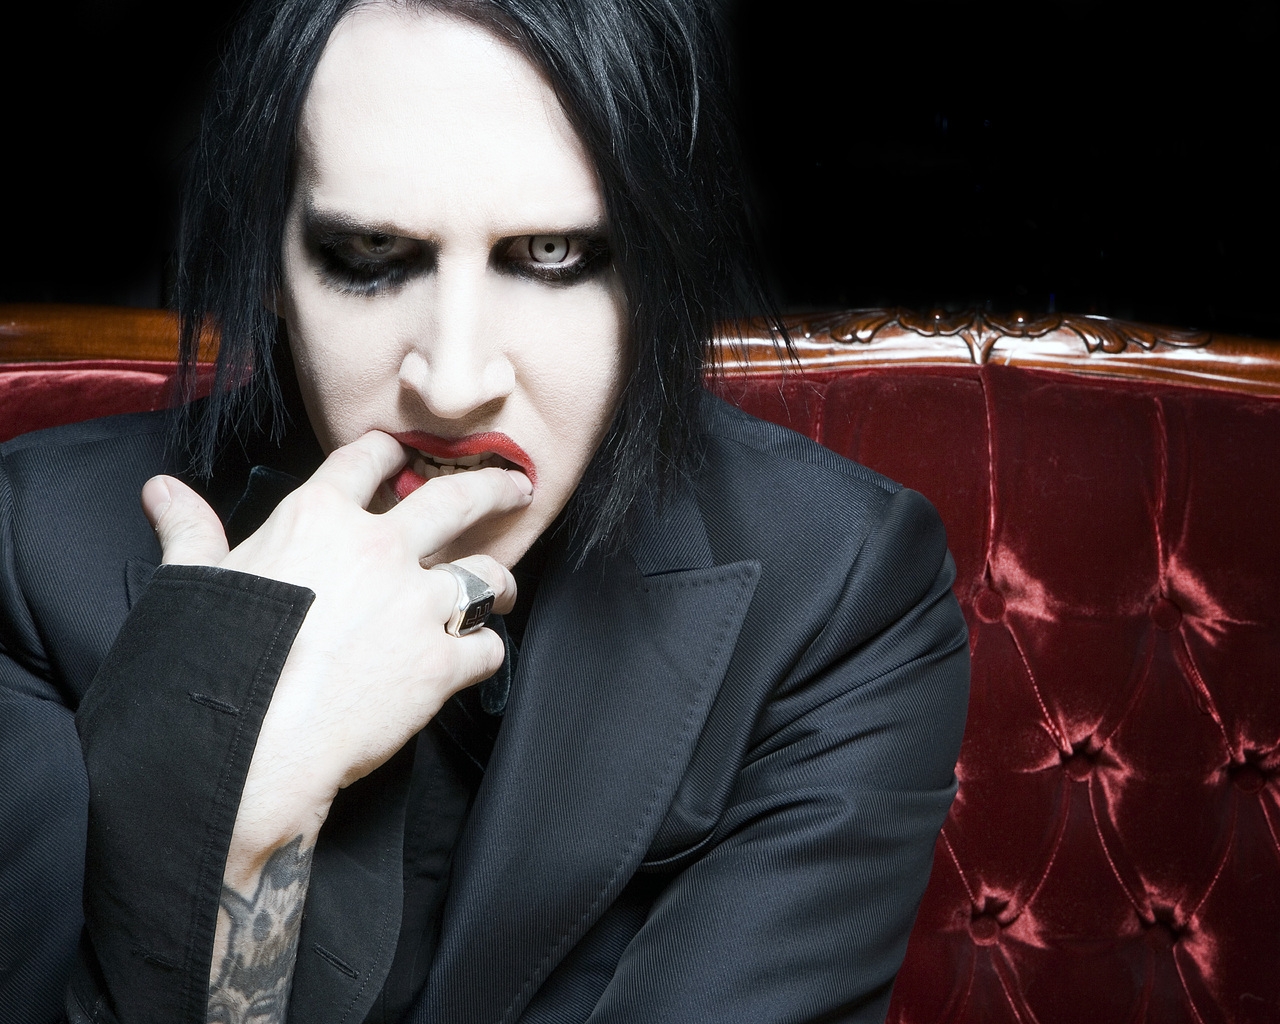 Marilyn Manson for 1280 x 1024 resolution